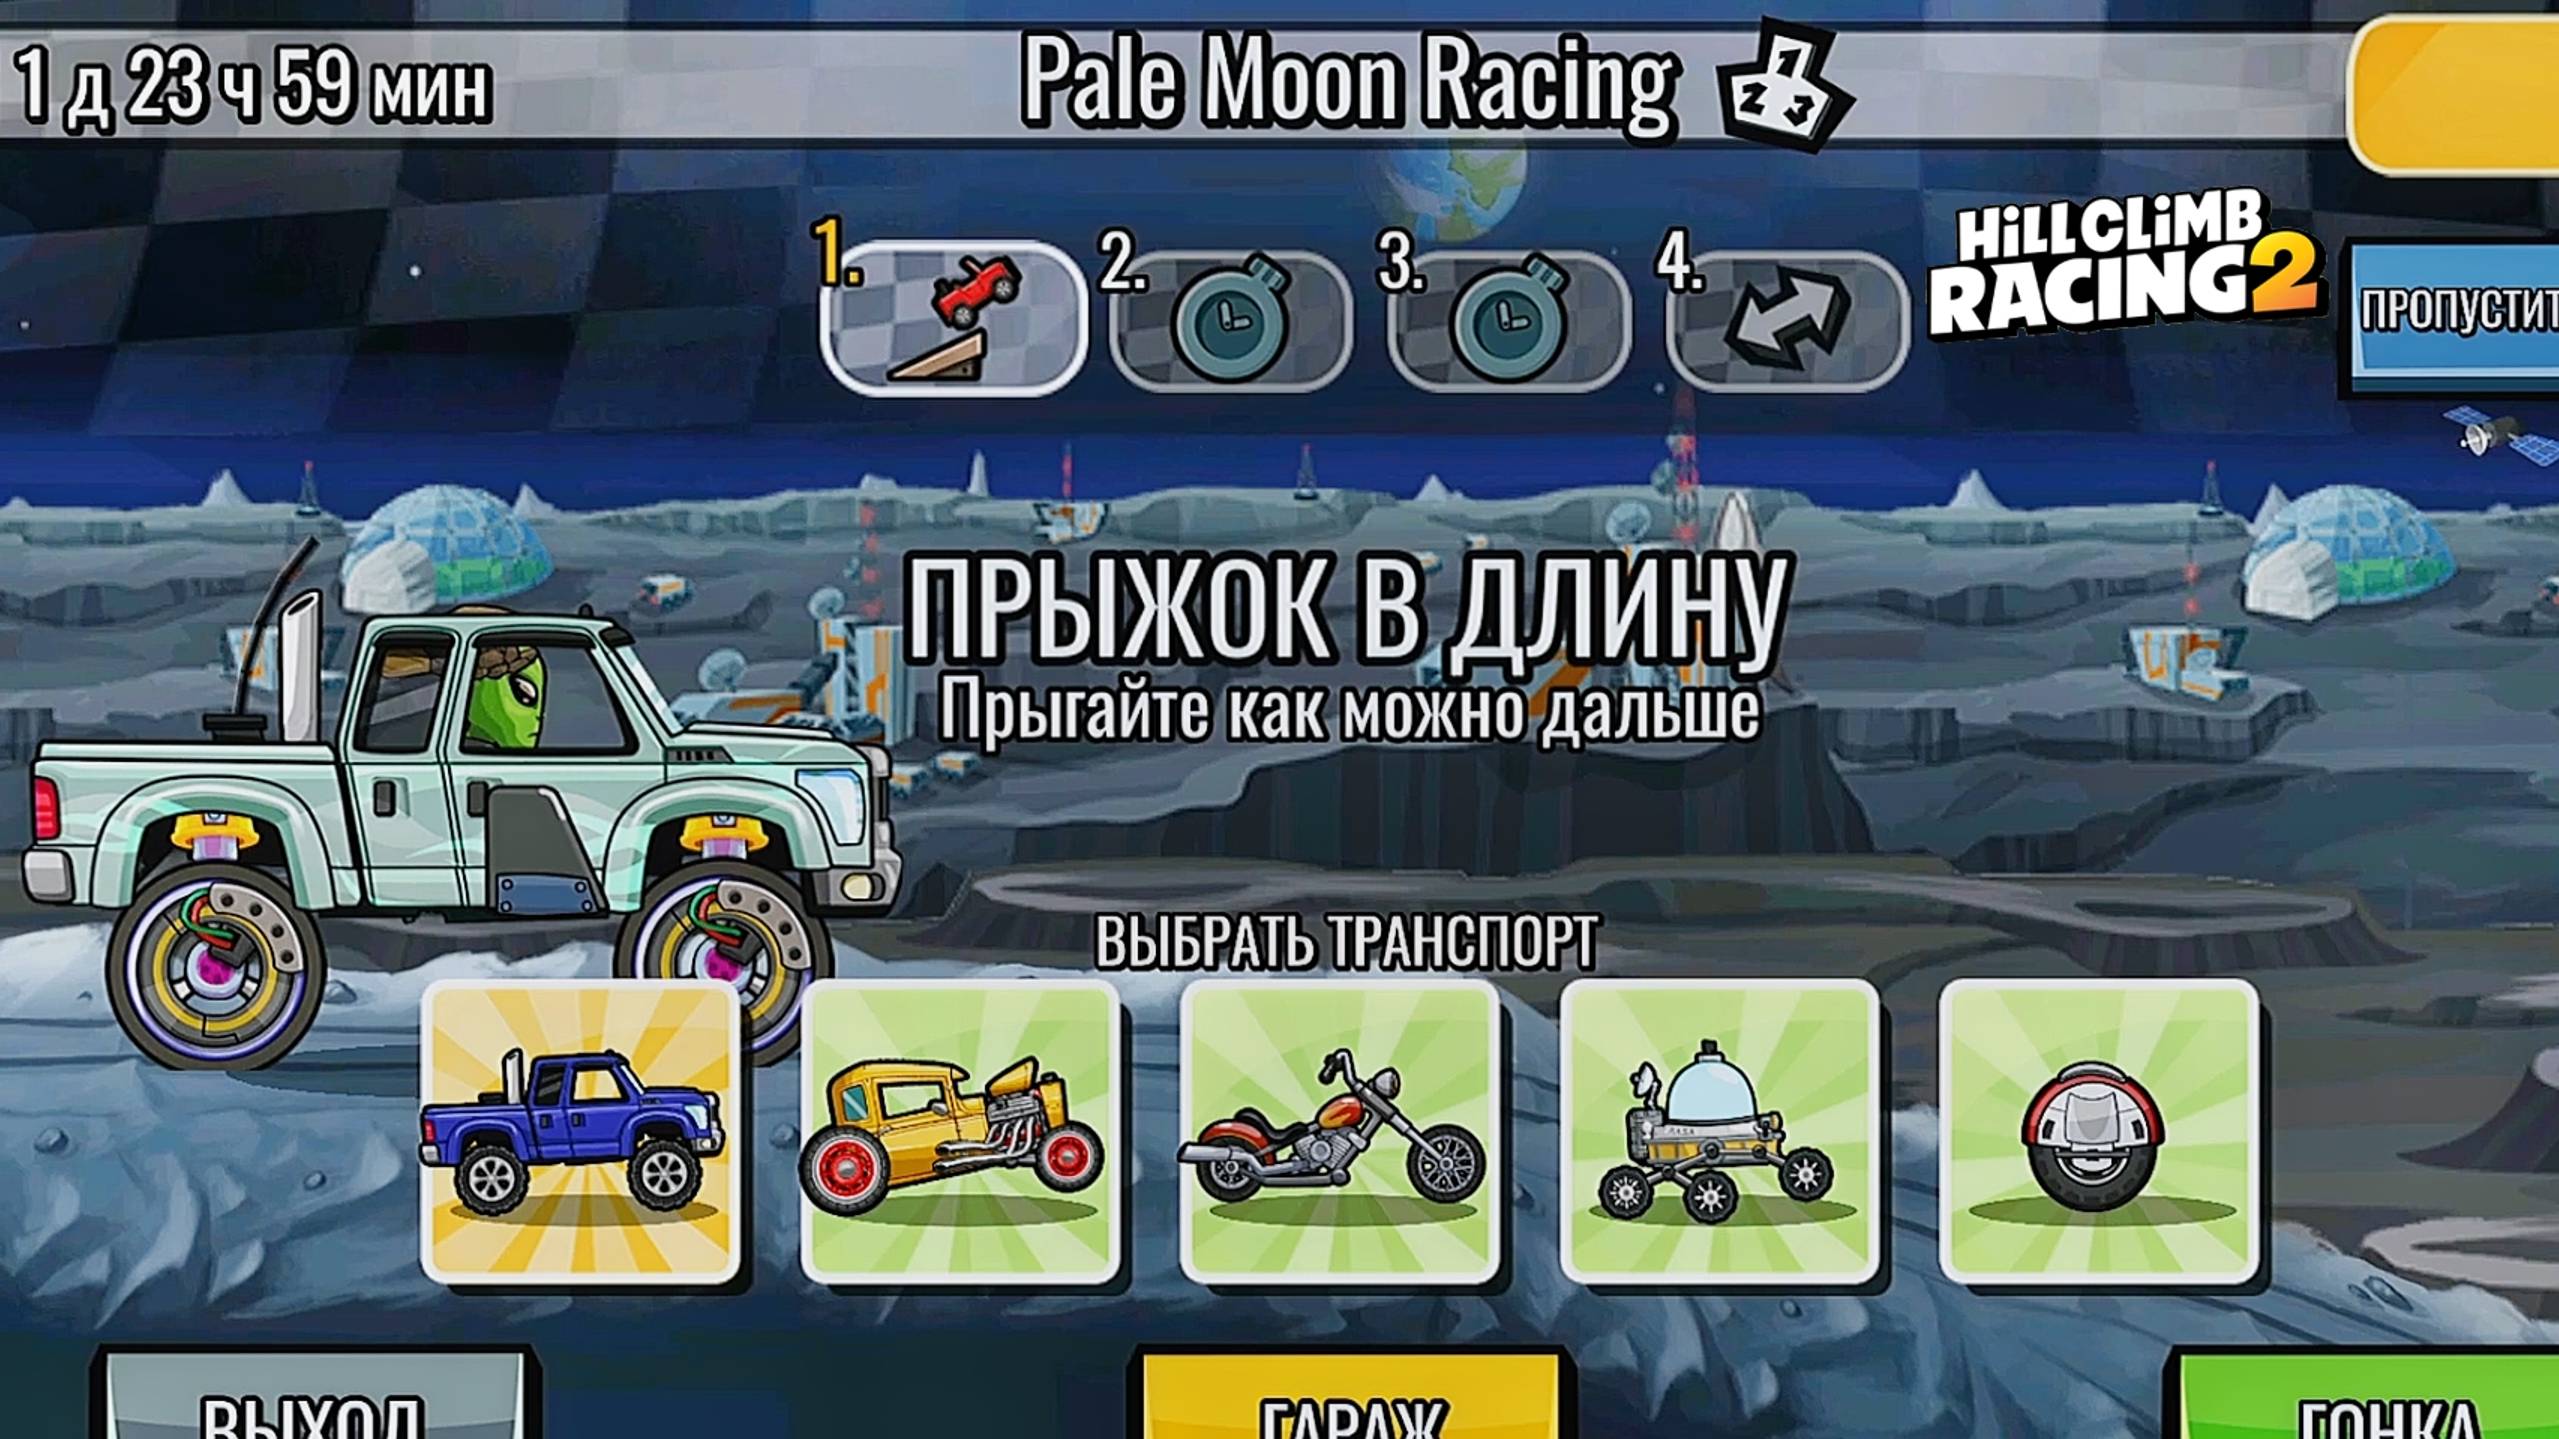 NEW TEAM EVENT Pale Moon Racing - Hill Climb Racing 2